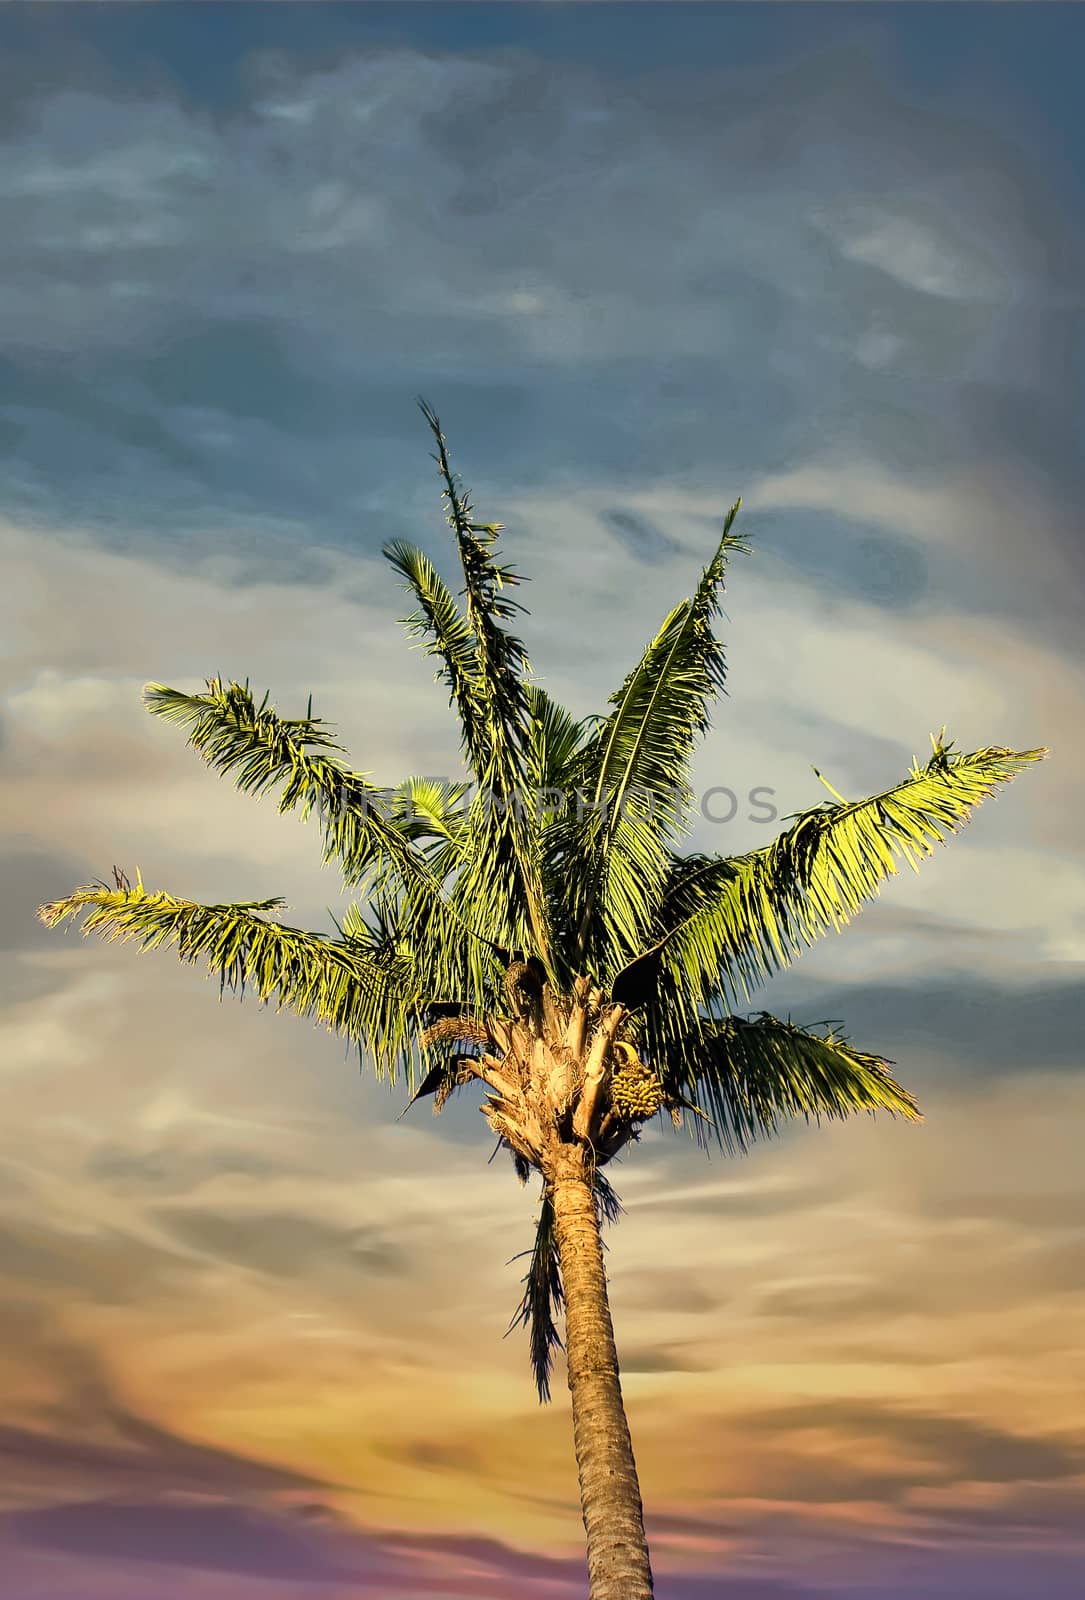 A palm tree against a Sunset sky